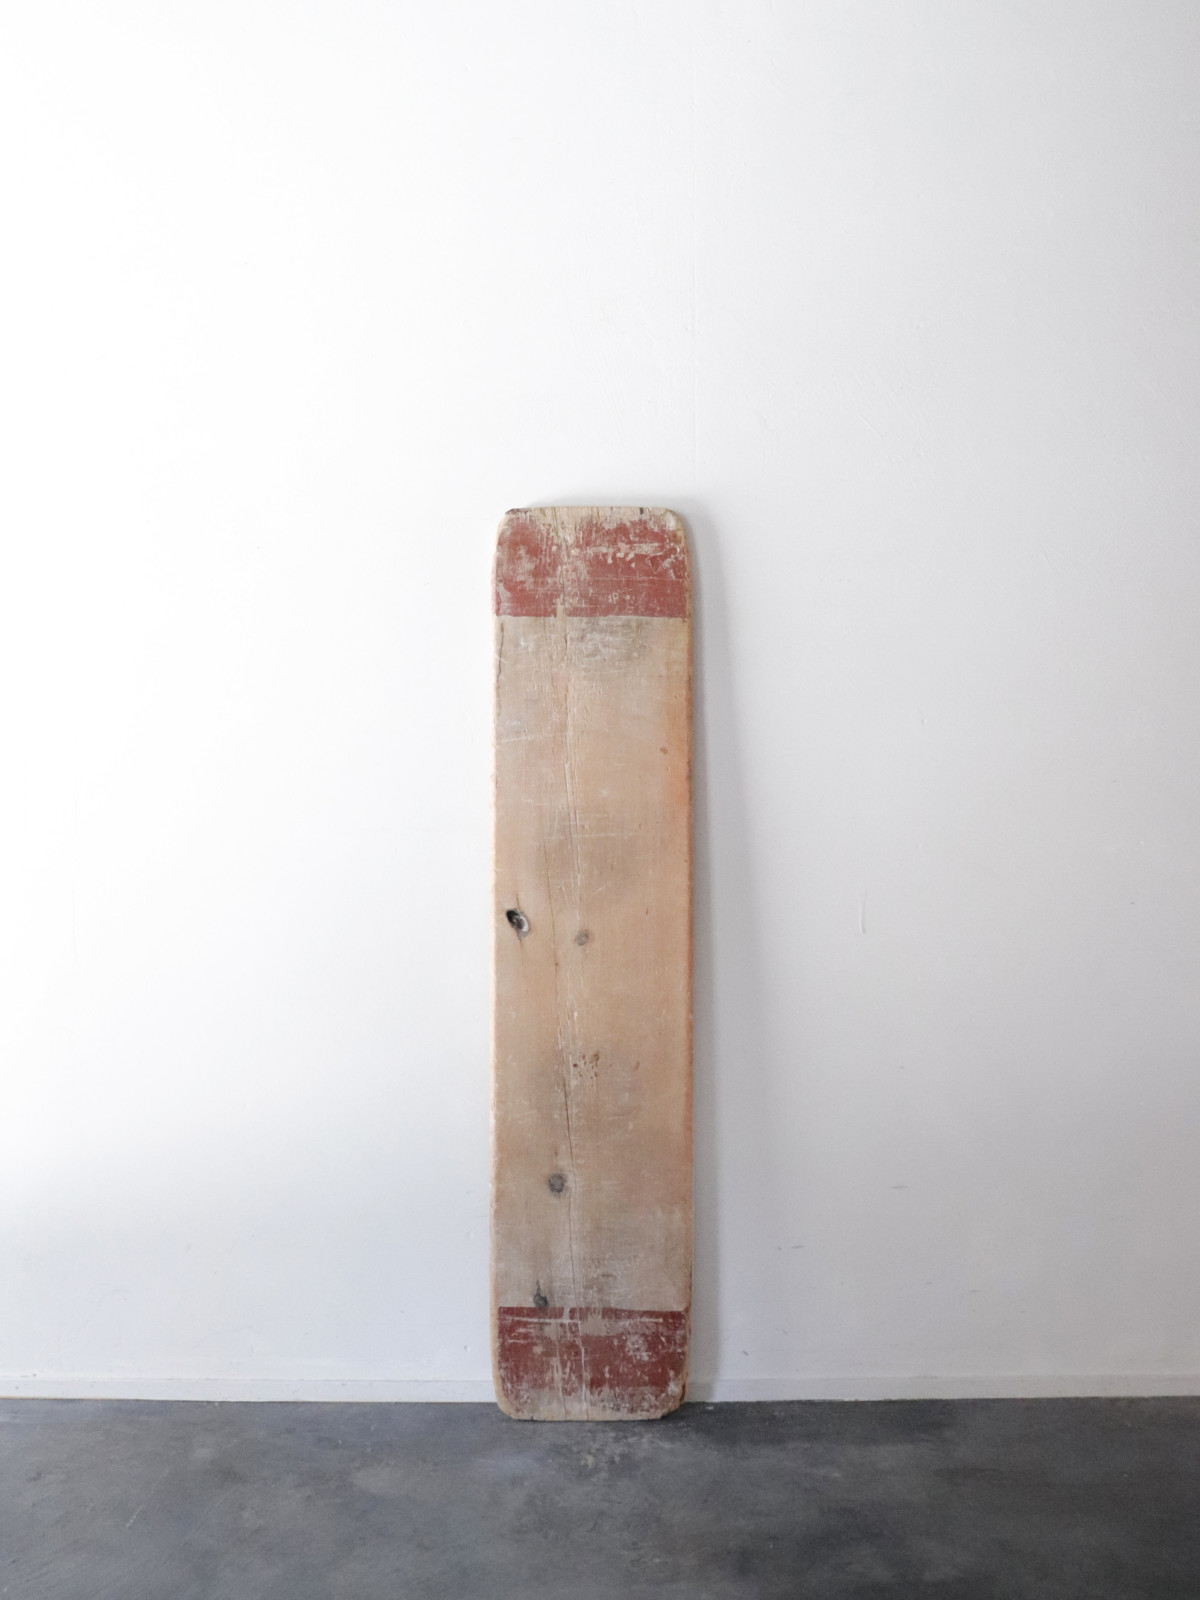 Wood board, England, Vintage